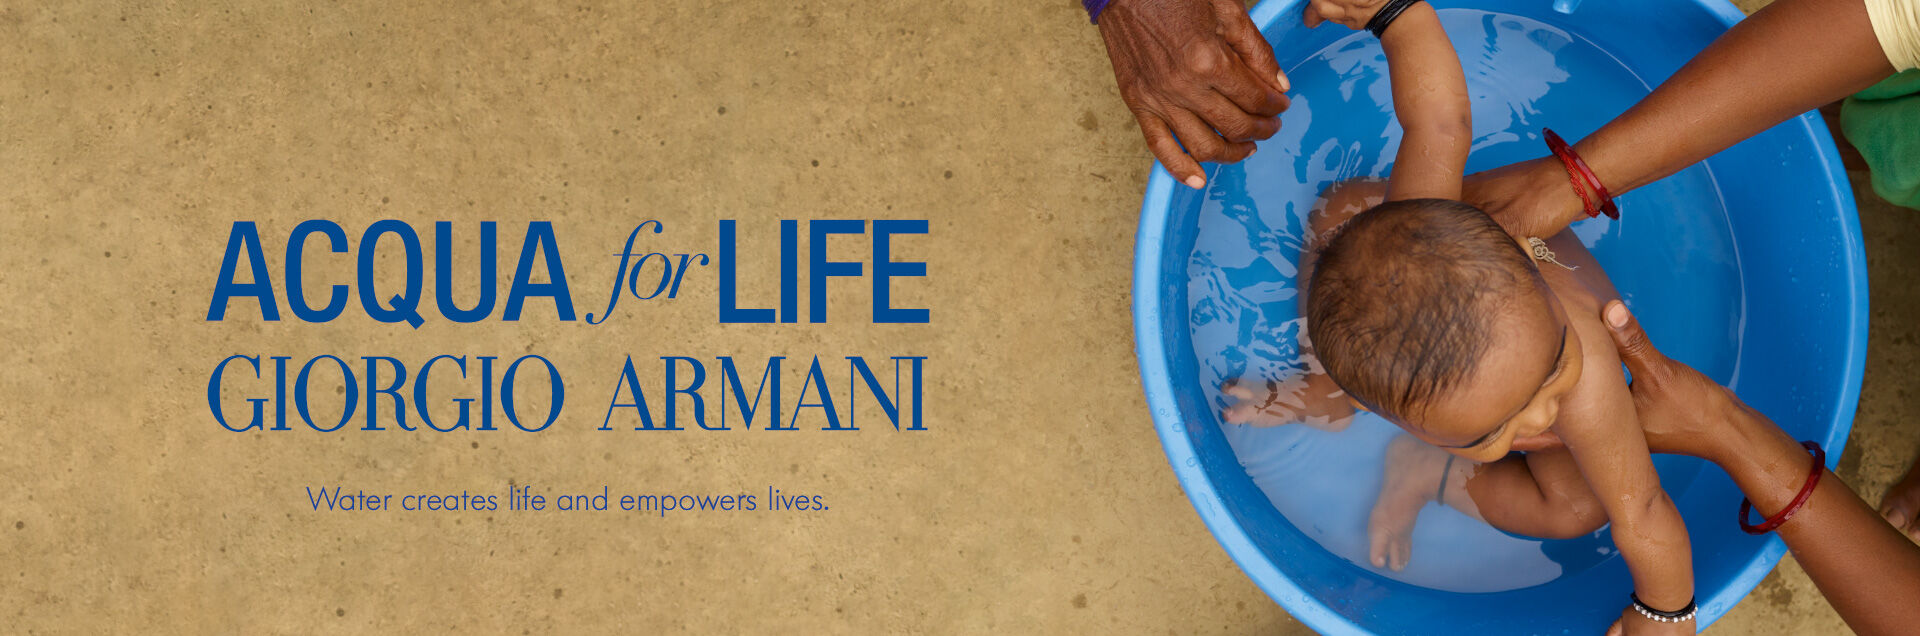 Acqua for Life - Giorgio Armani - Water creates life and empowers lives